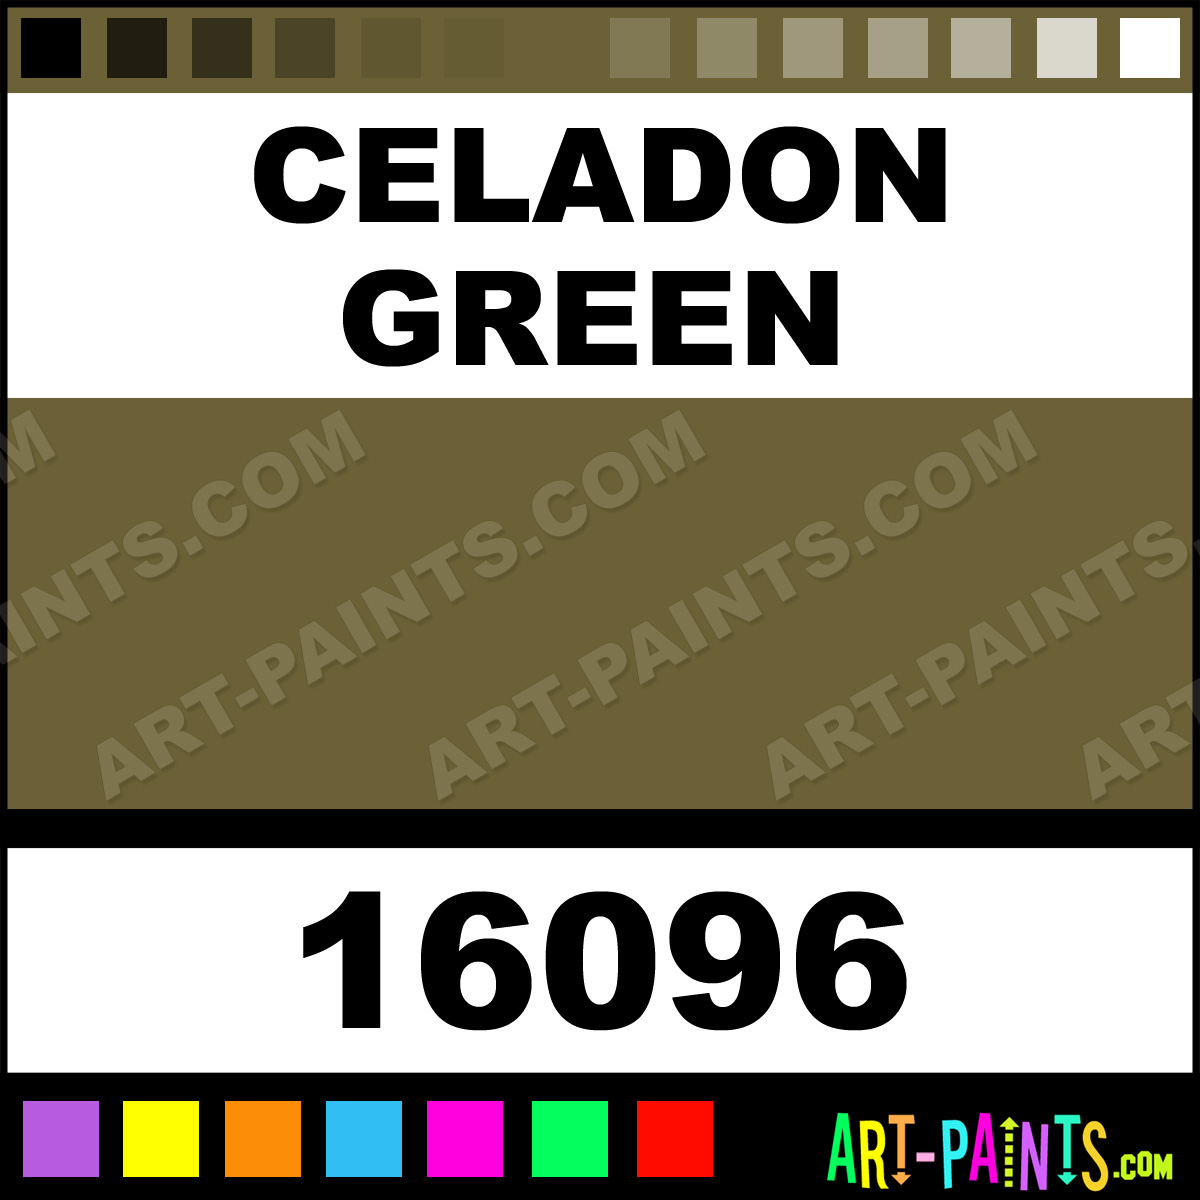 http://www.art-paints.com/Paints/Glass/Plaid/Celadon-Green/Celadon-Green-lg.jpg